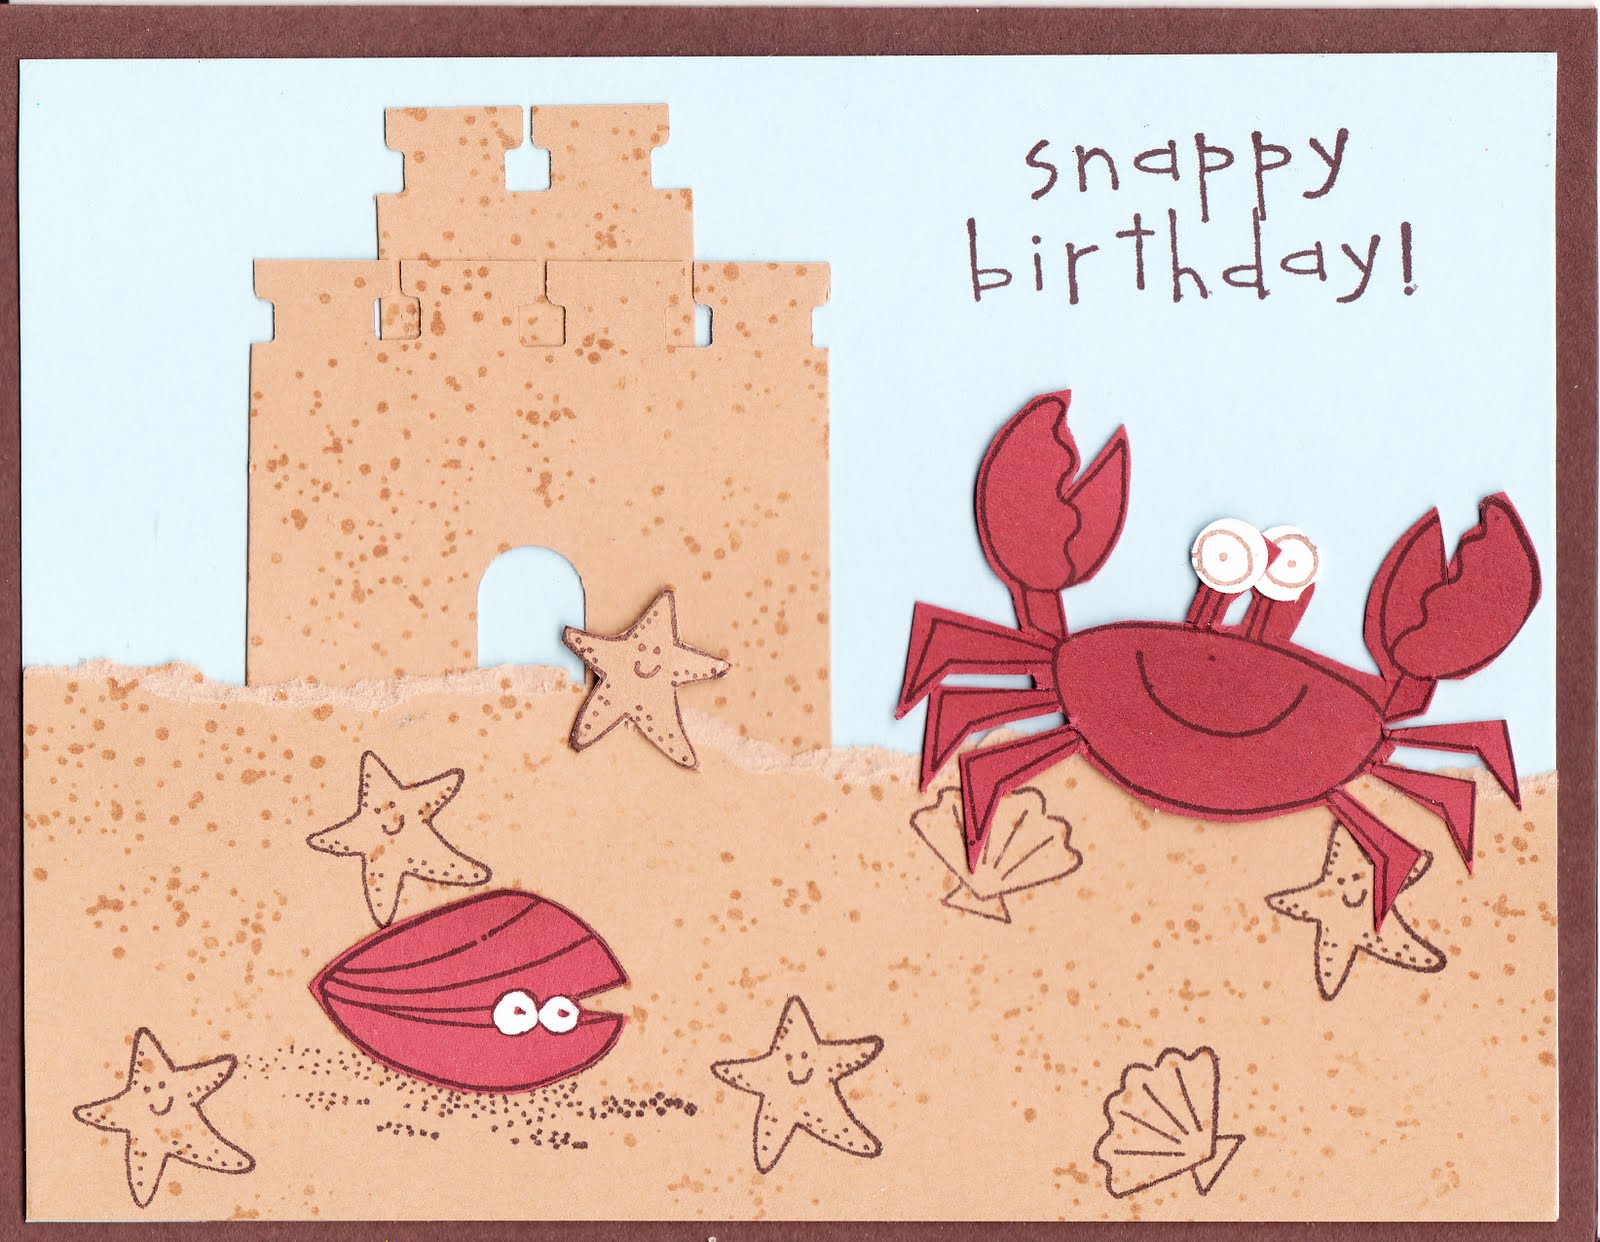 crabby-cakes-blog-little-bit-of-crabbie-snappy-birthday-card